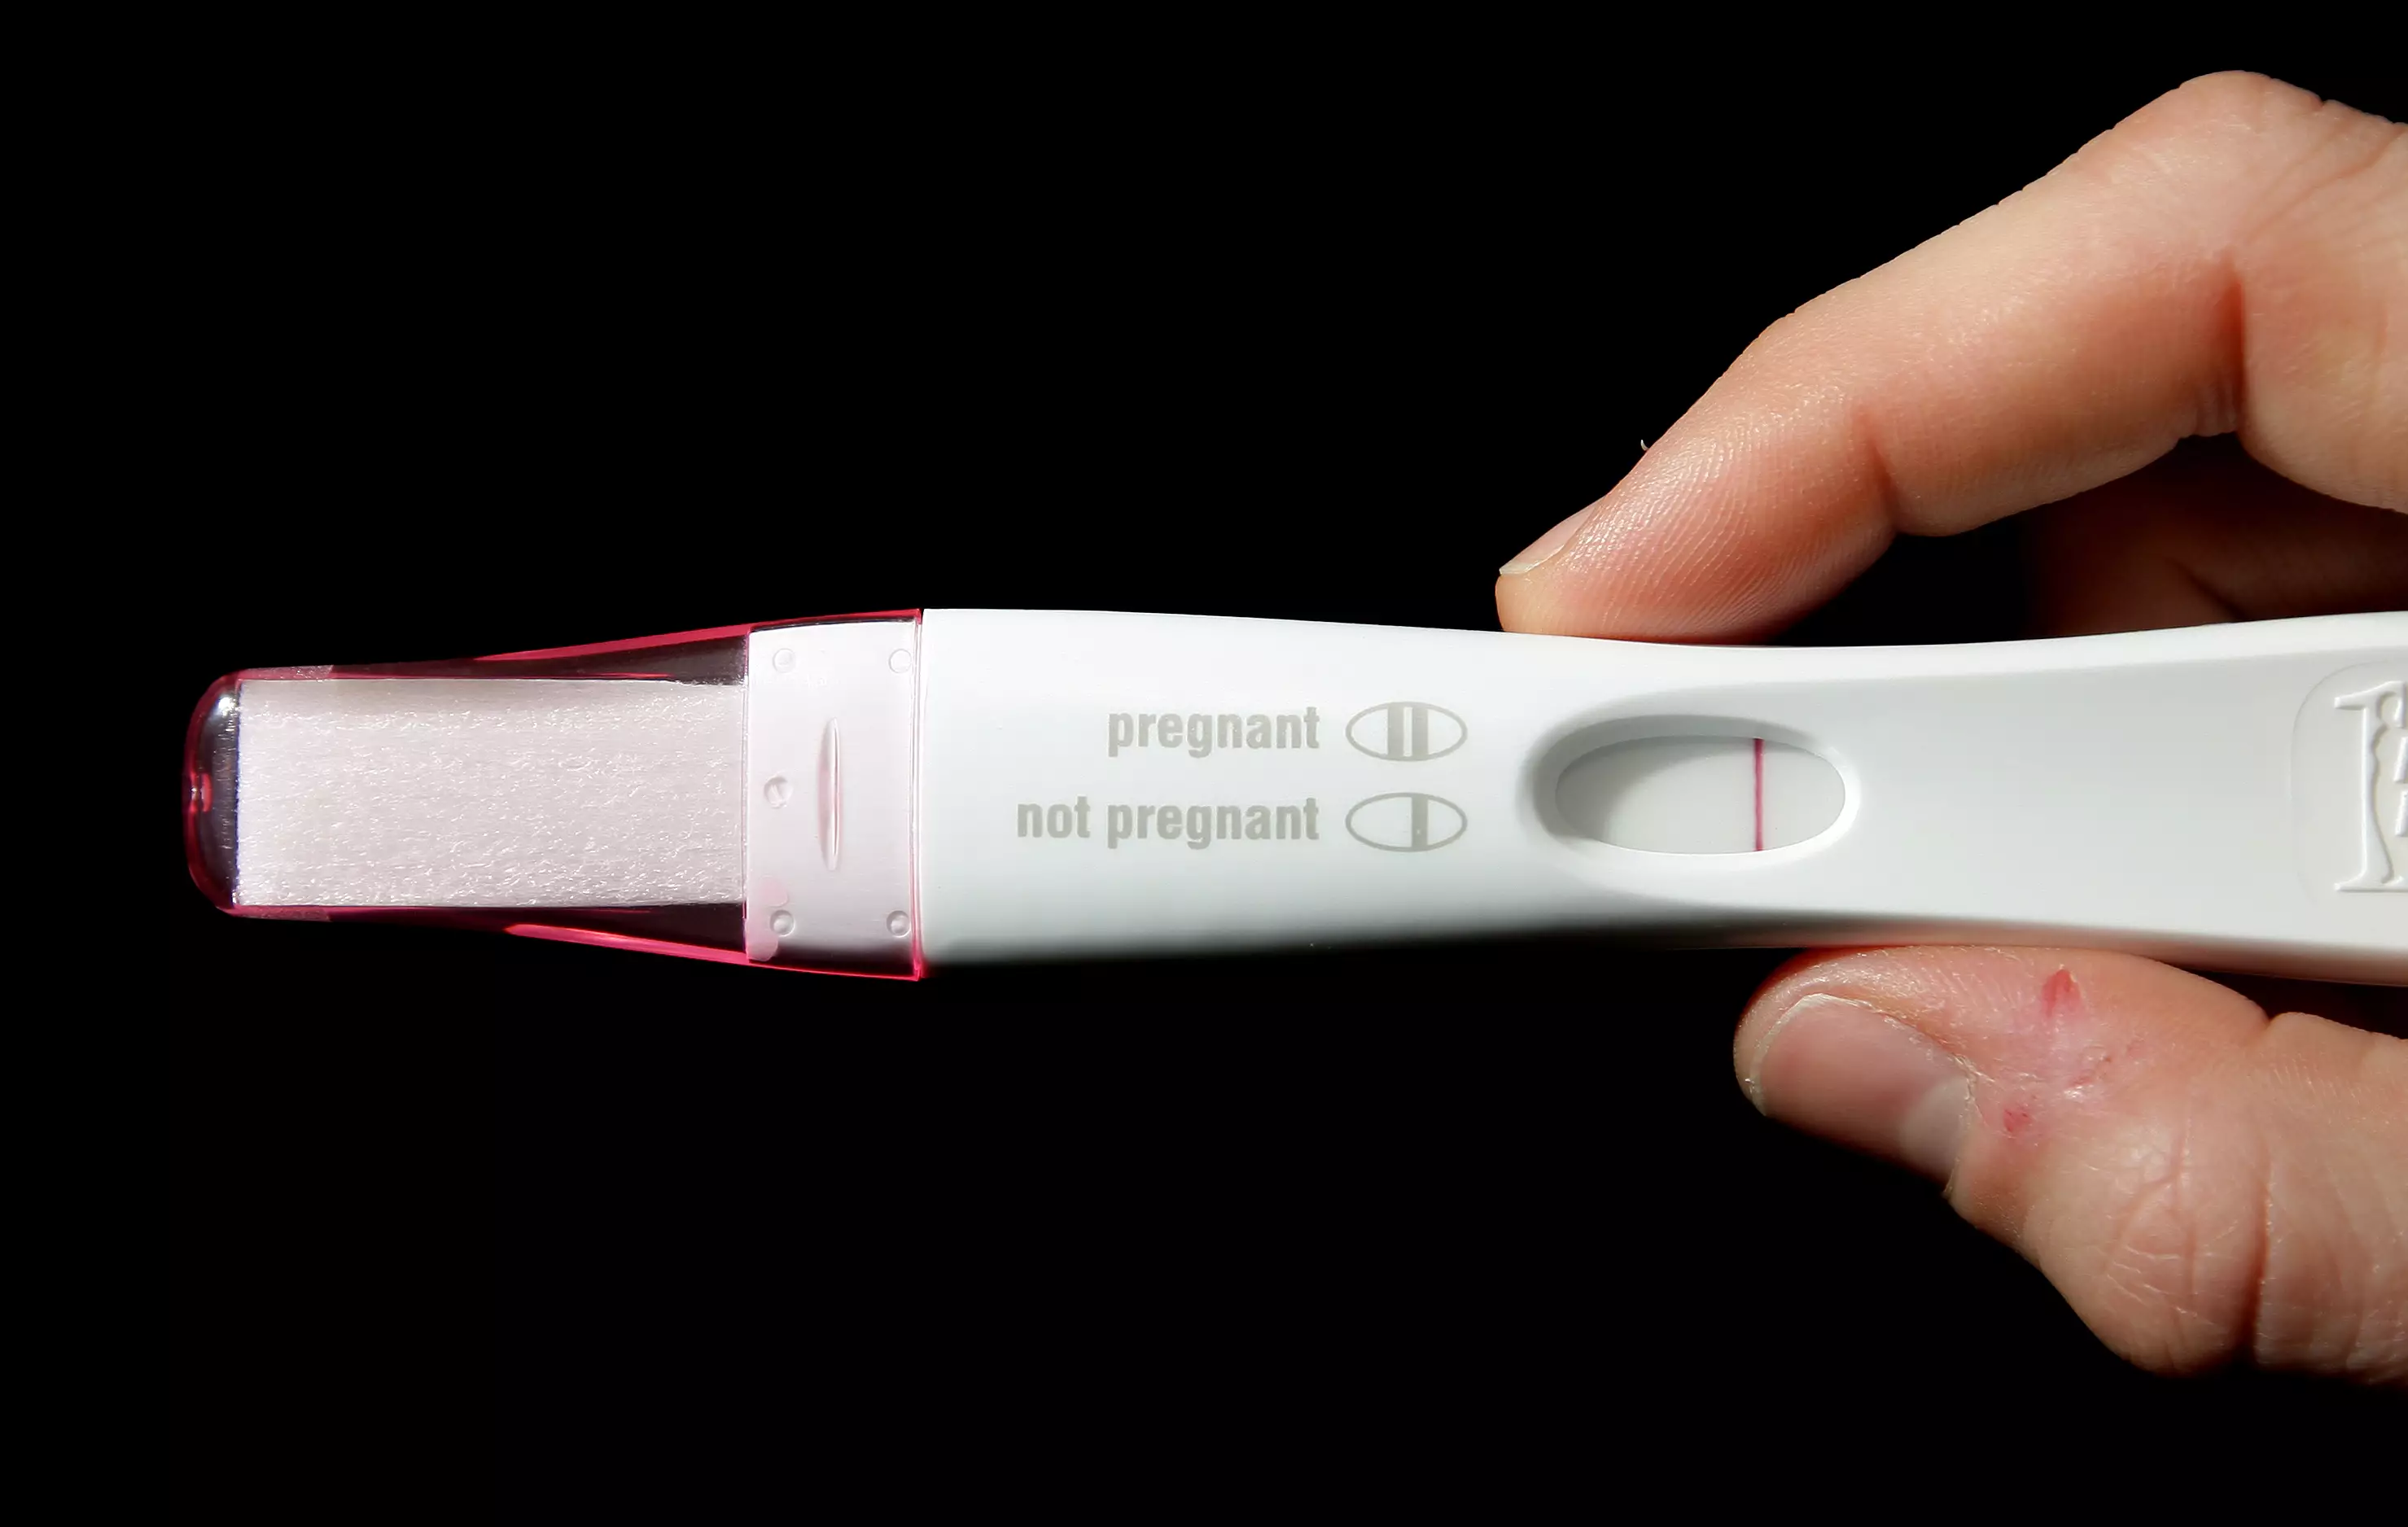 An ACTUAL pregnancy test.